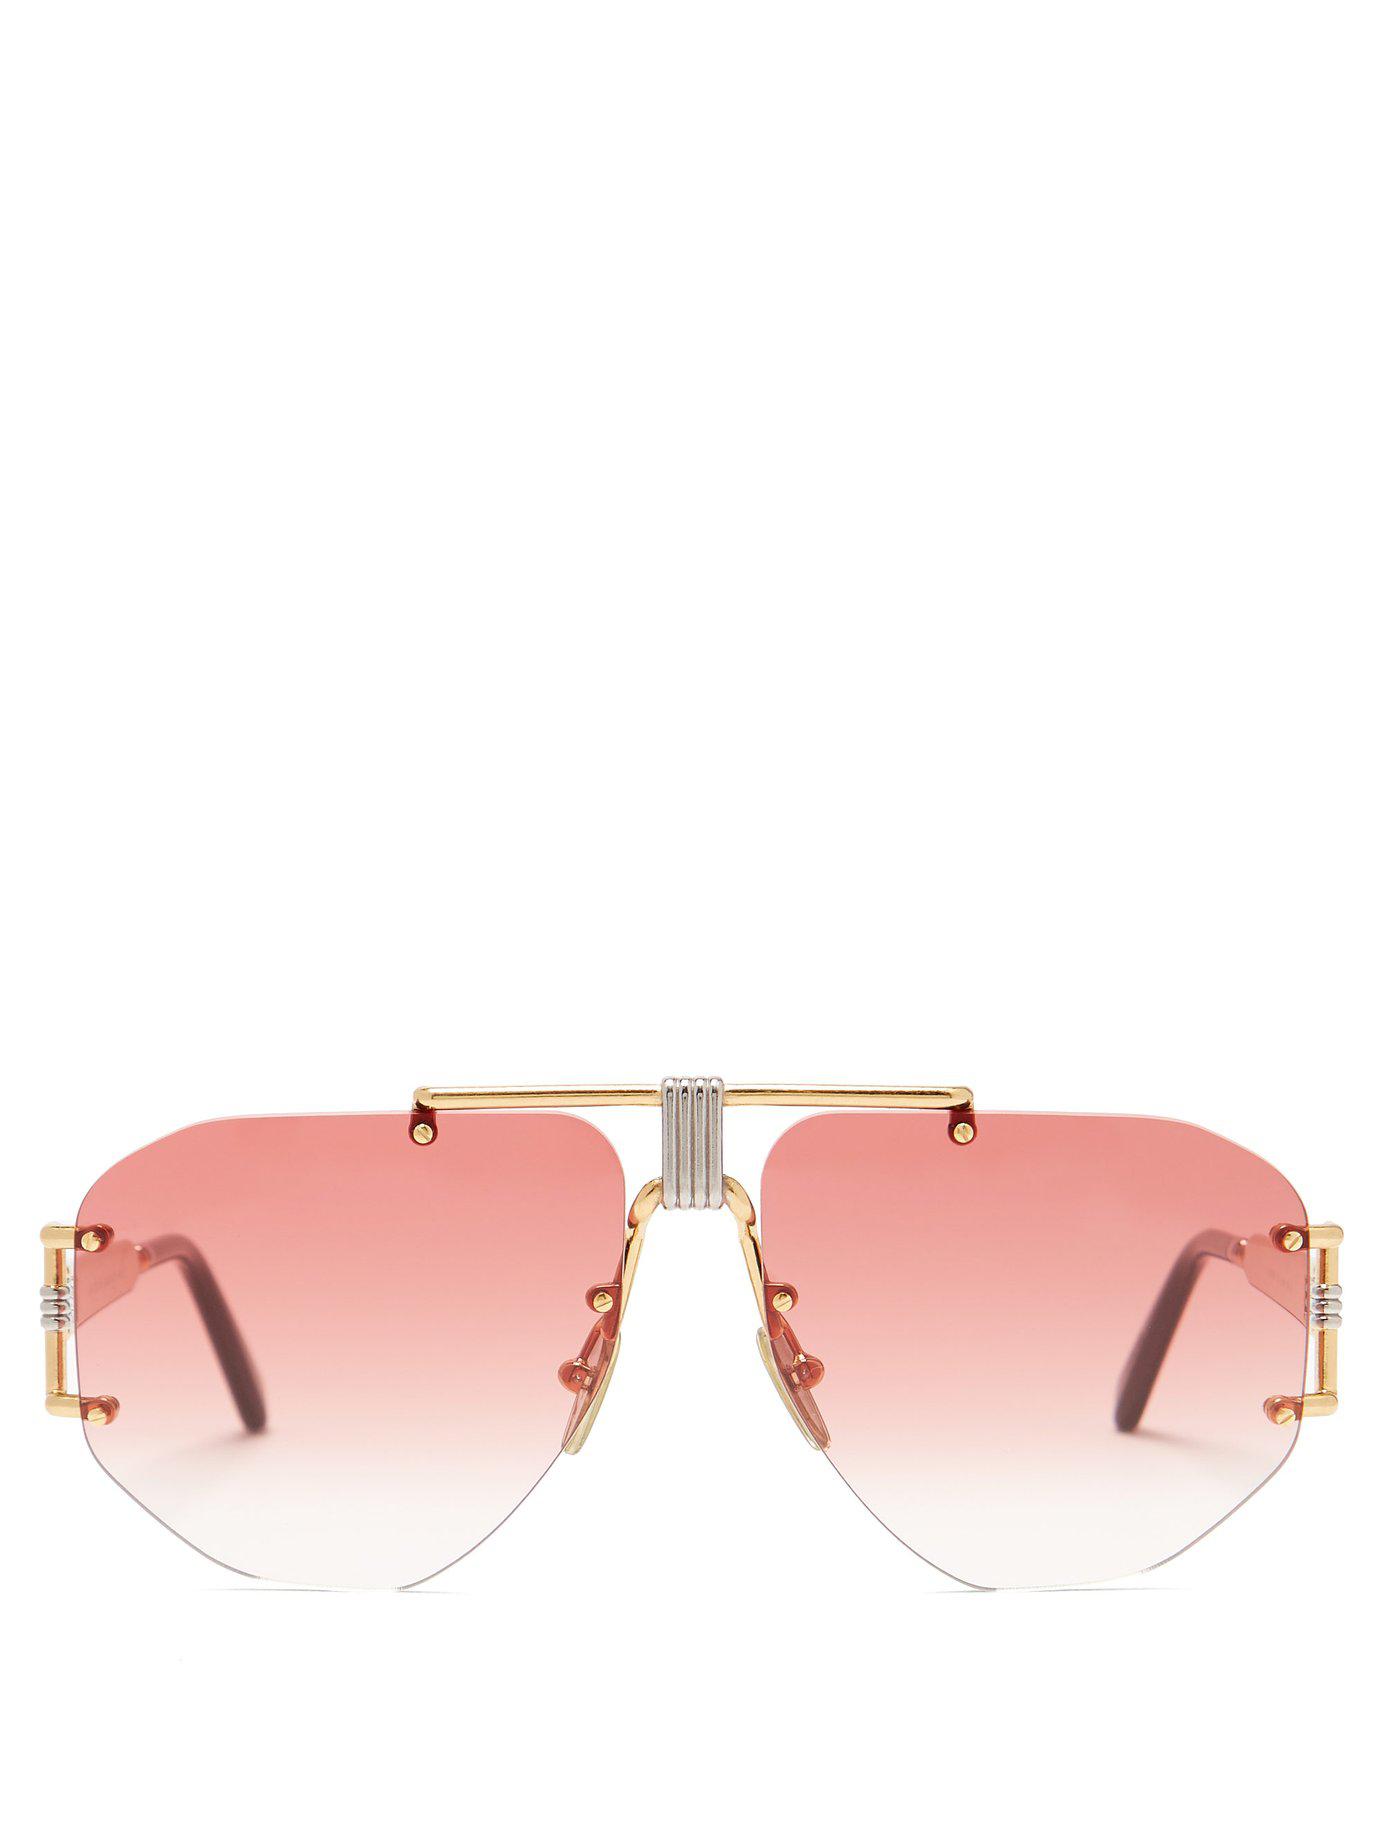 stamme ophobe ekskrementer Celine Fragola Aviator Gold Tone Metal Sunglasses in Pink | Lyst